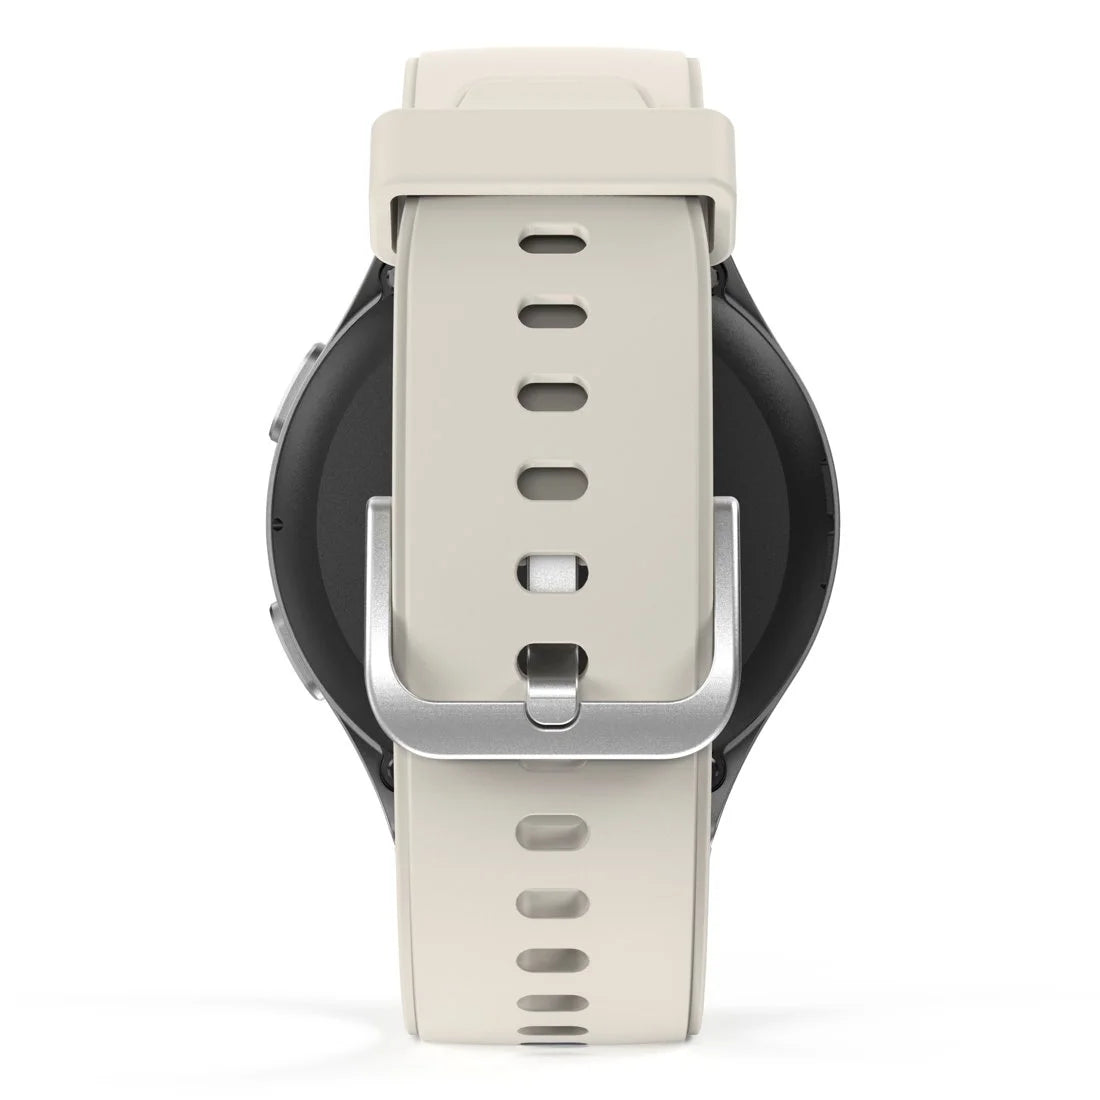 Smartwatch Hama 8900 GPS AMOLED 1.3 szara koperta srebrna ramka pasek silikonowy